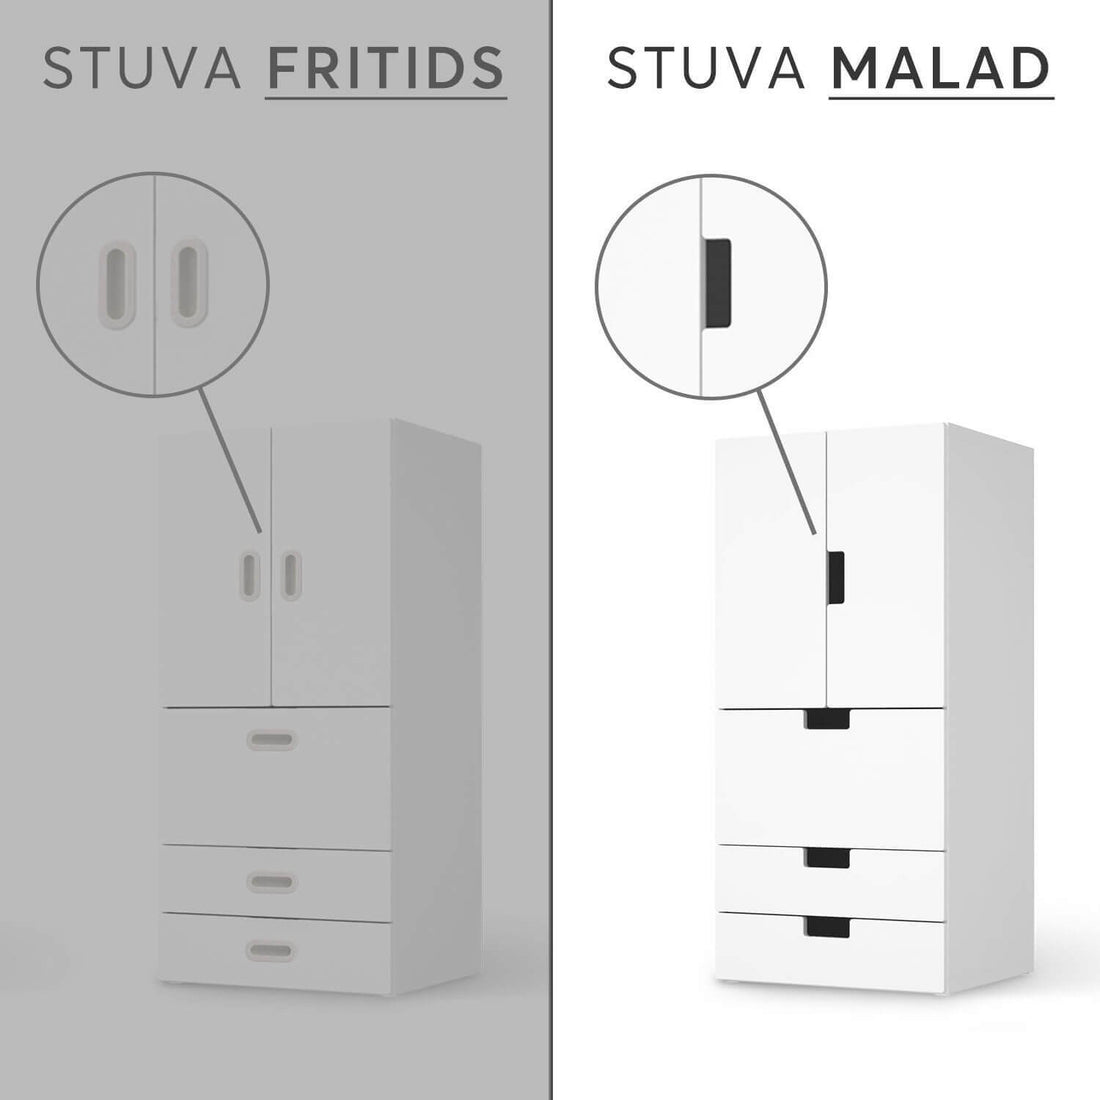 Vergleich IKEA Stuva Malad / Fritids - Sydney